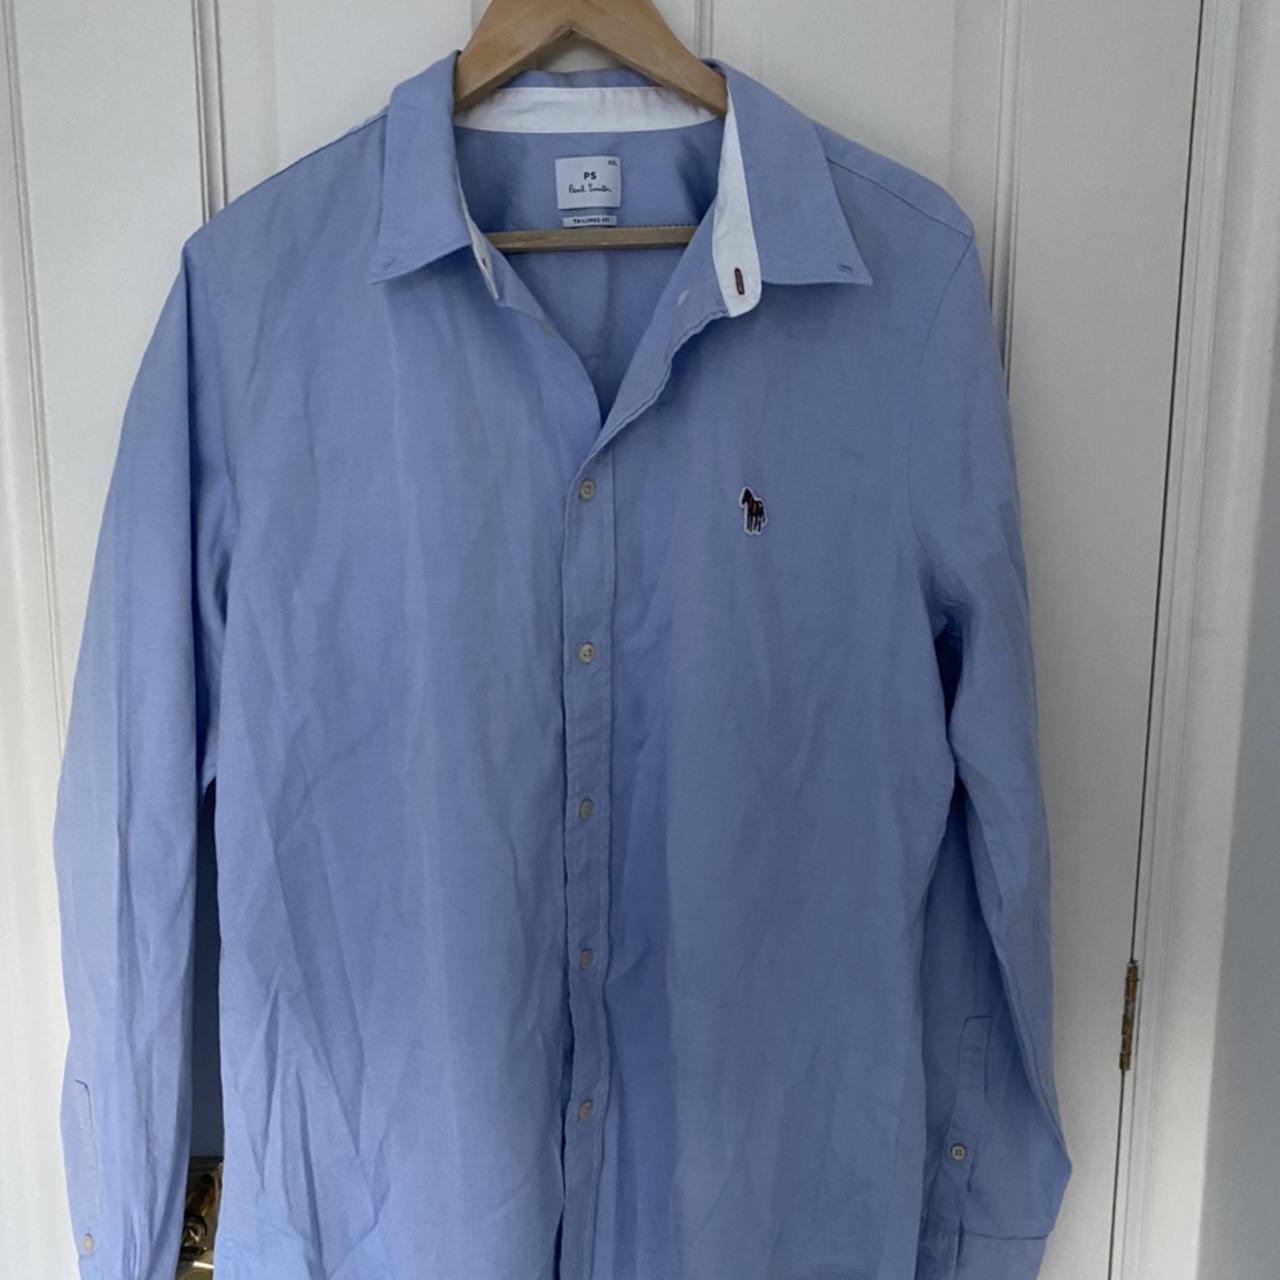 Paul smith blue shirt size xxl - Depop